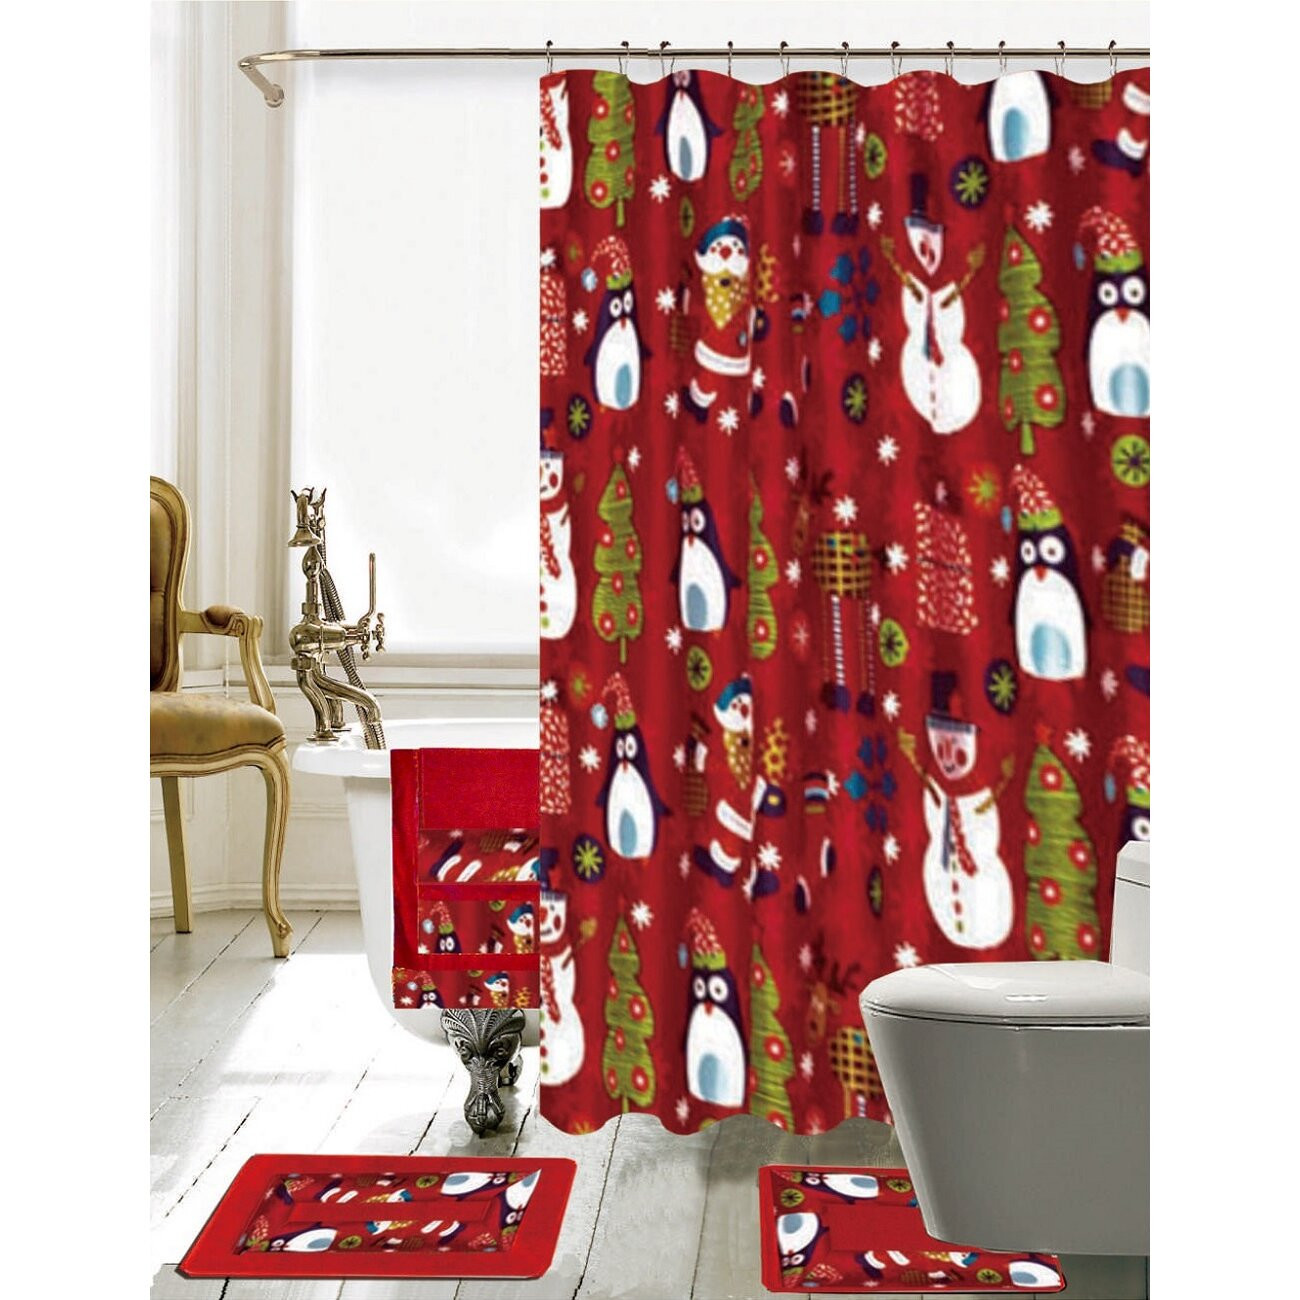 Bathroom Sets With Shower Curtain
 Daniels Bath Christmas Bathroom Decor 18 Piece Shower